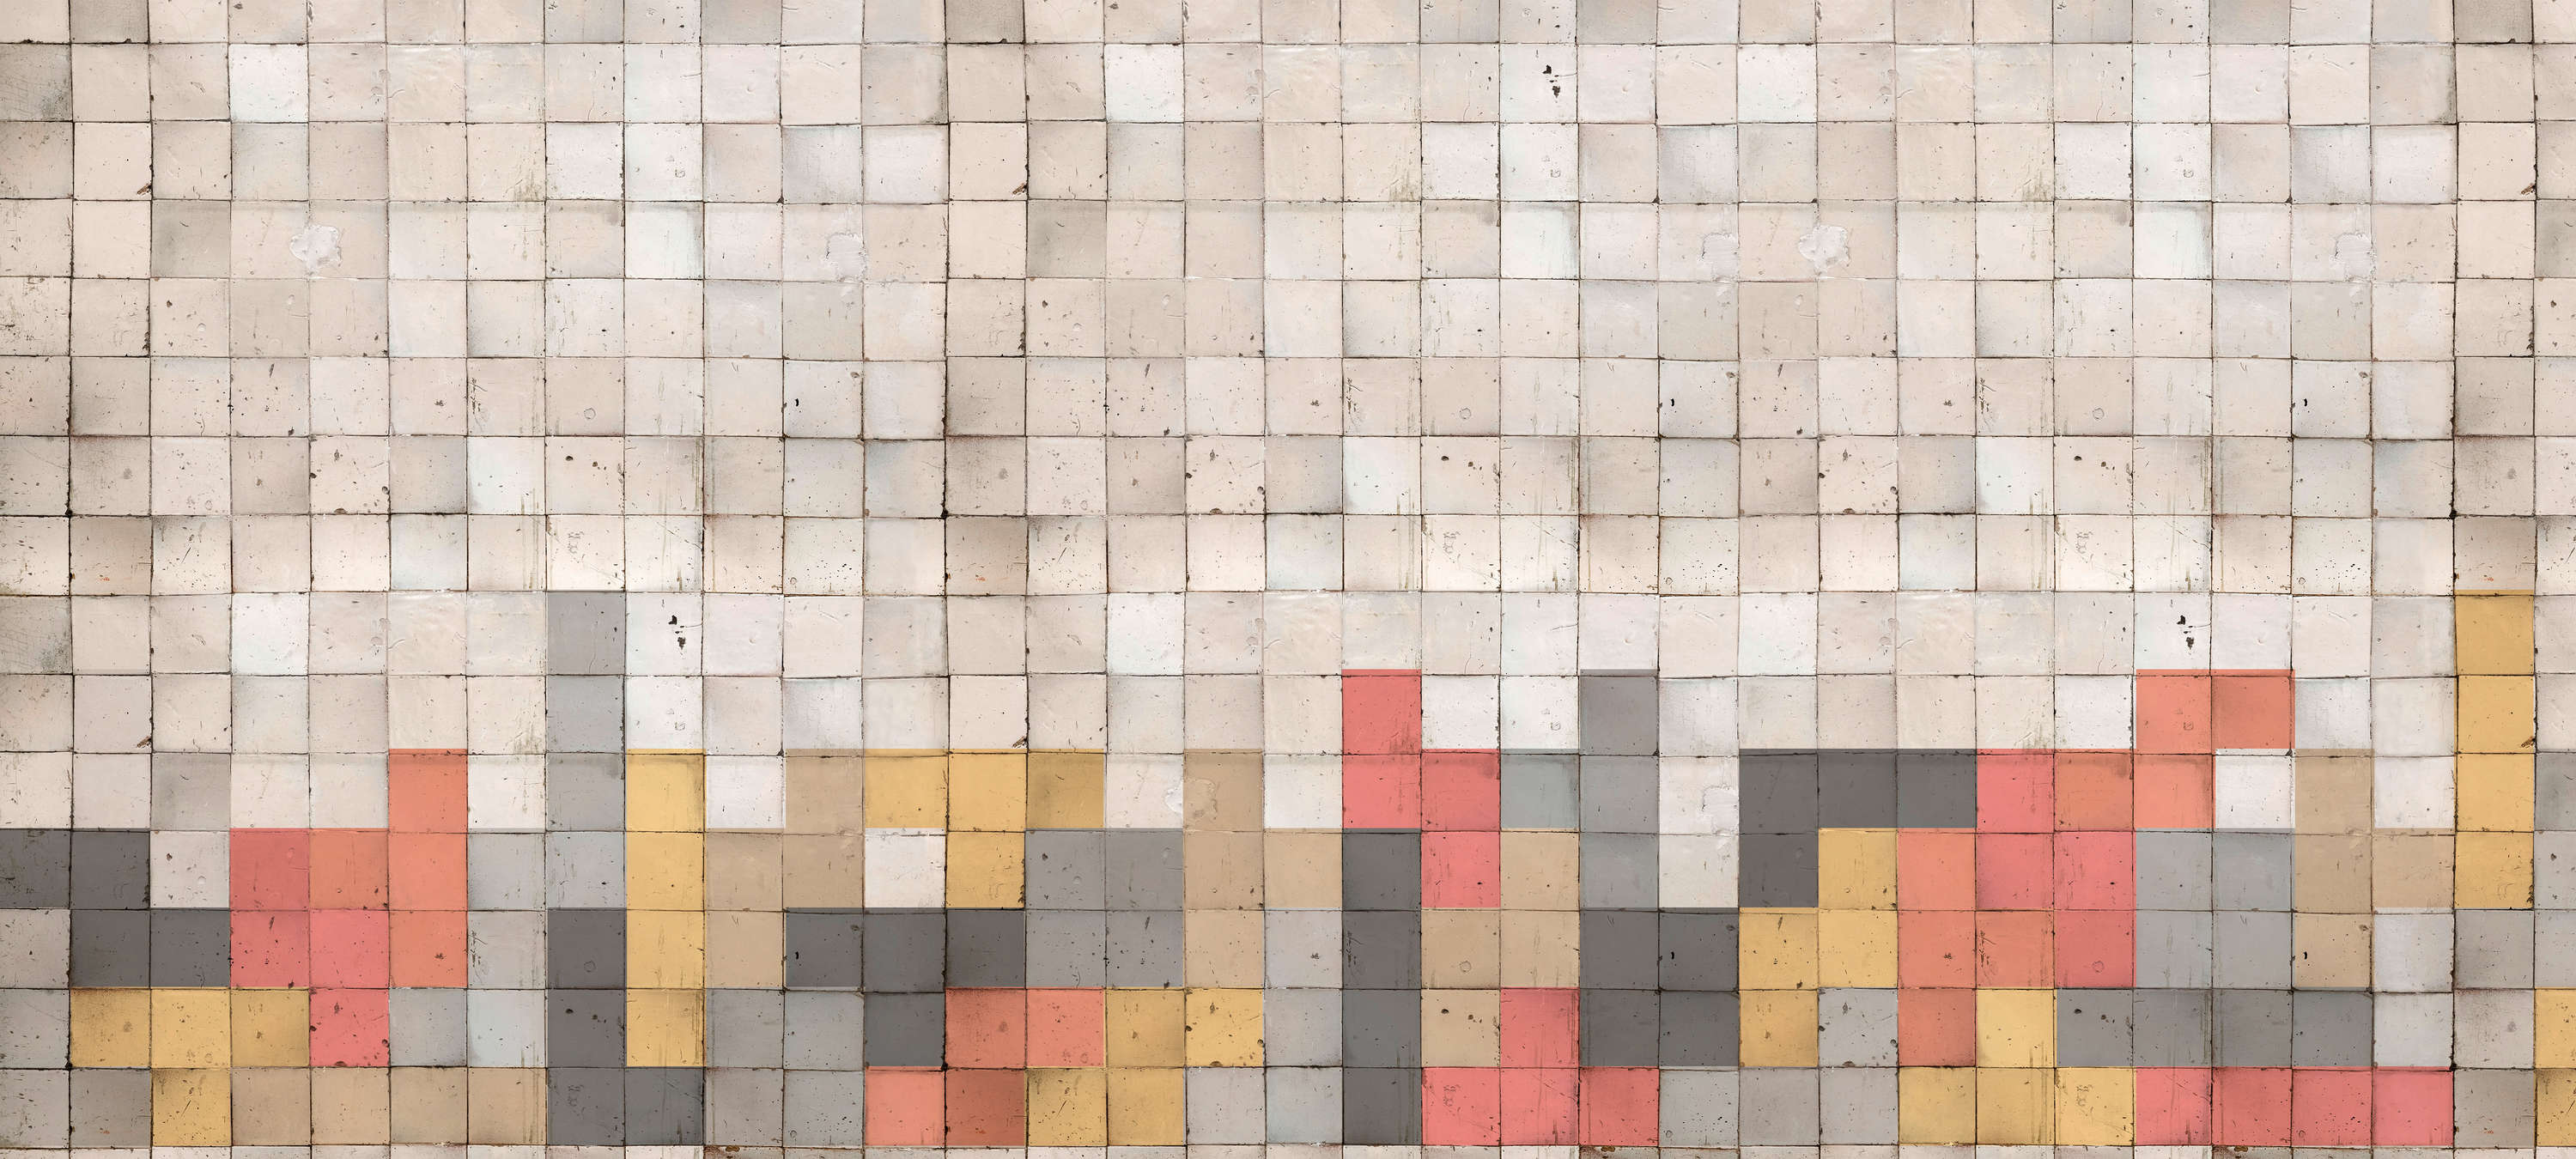             Mosaik Fototapete mir Betonblock-Muster – Grau, Orange, Gelb
        